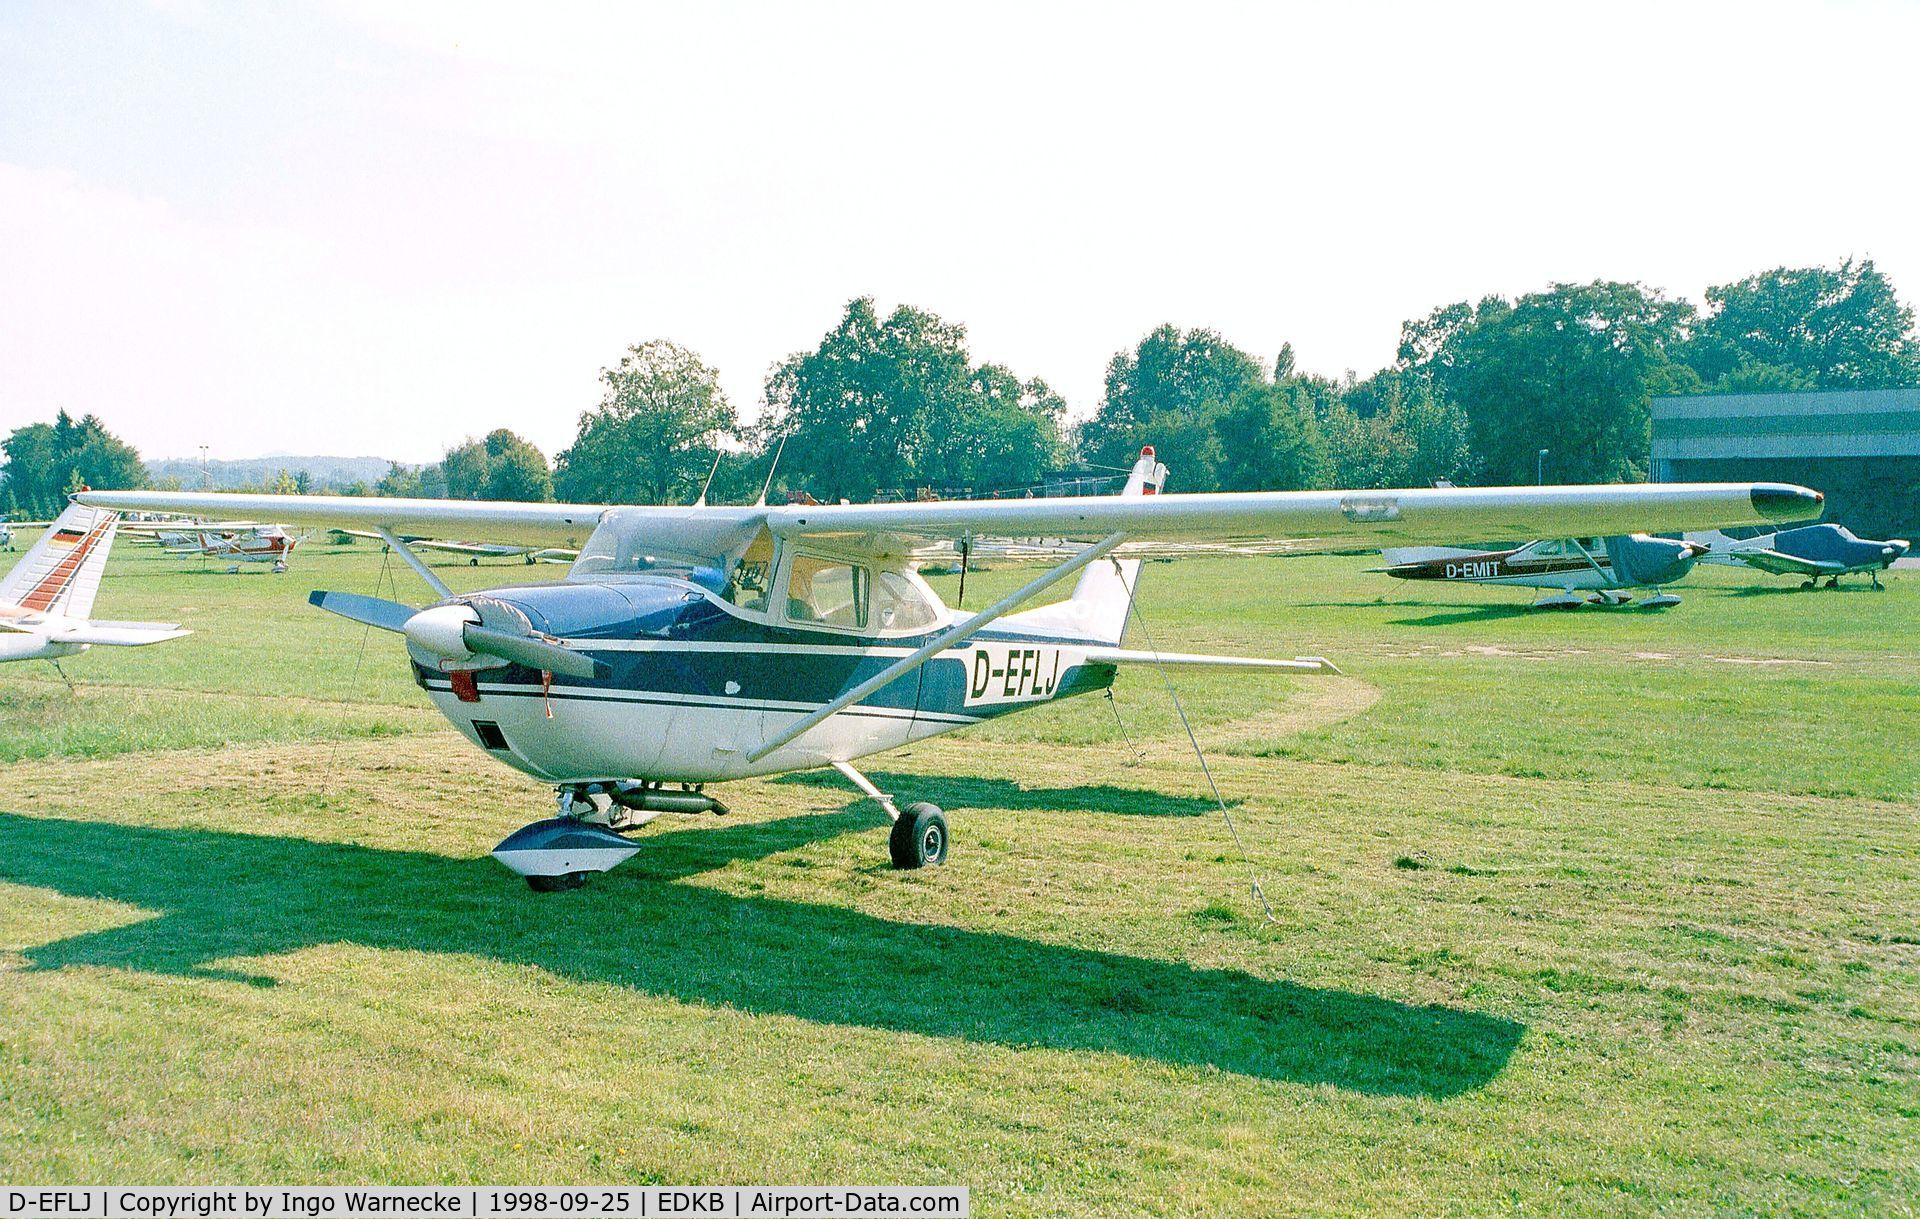 D-EFLJ, Reims F172F C/N 0139, Cessna (Reims) F172 Skyhawk at Bonn-Hangelar airfield